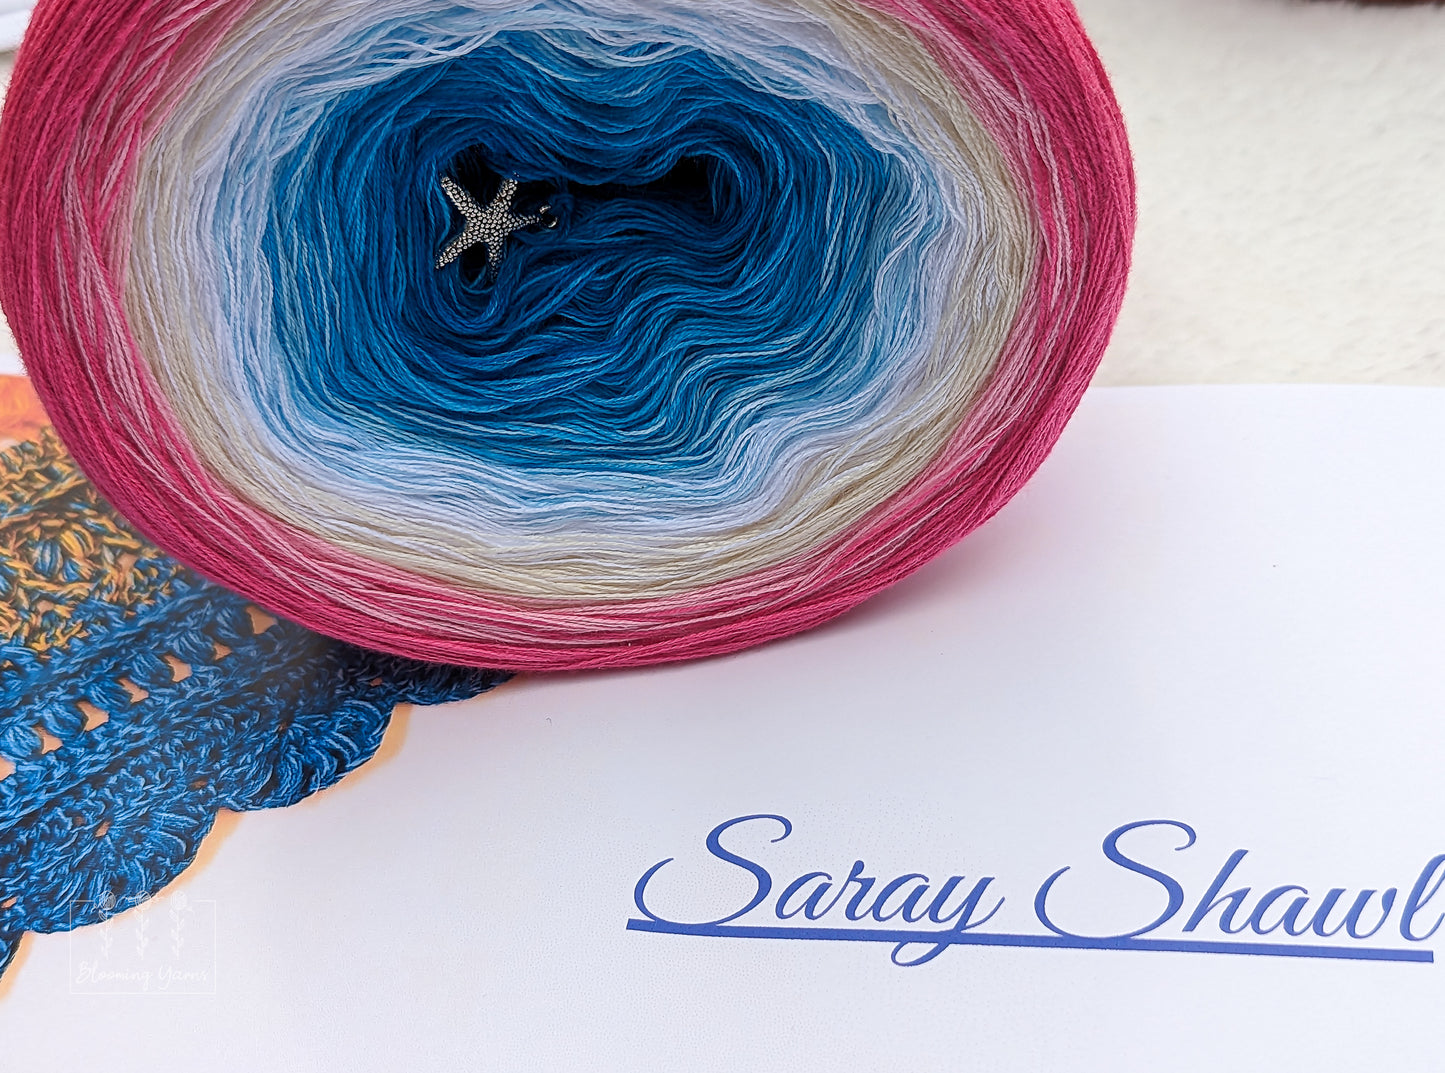 Saray shawl pattern by Ancy-Fancy